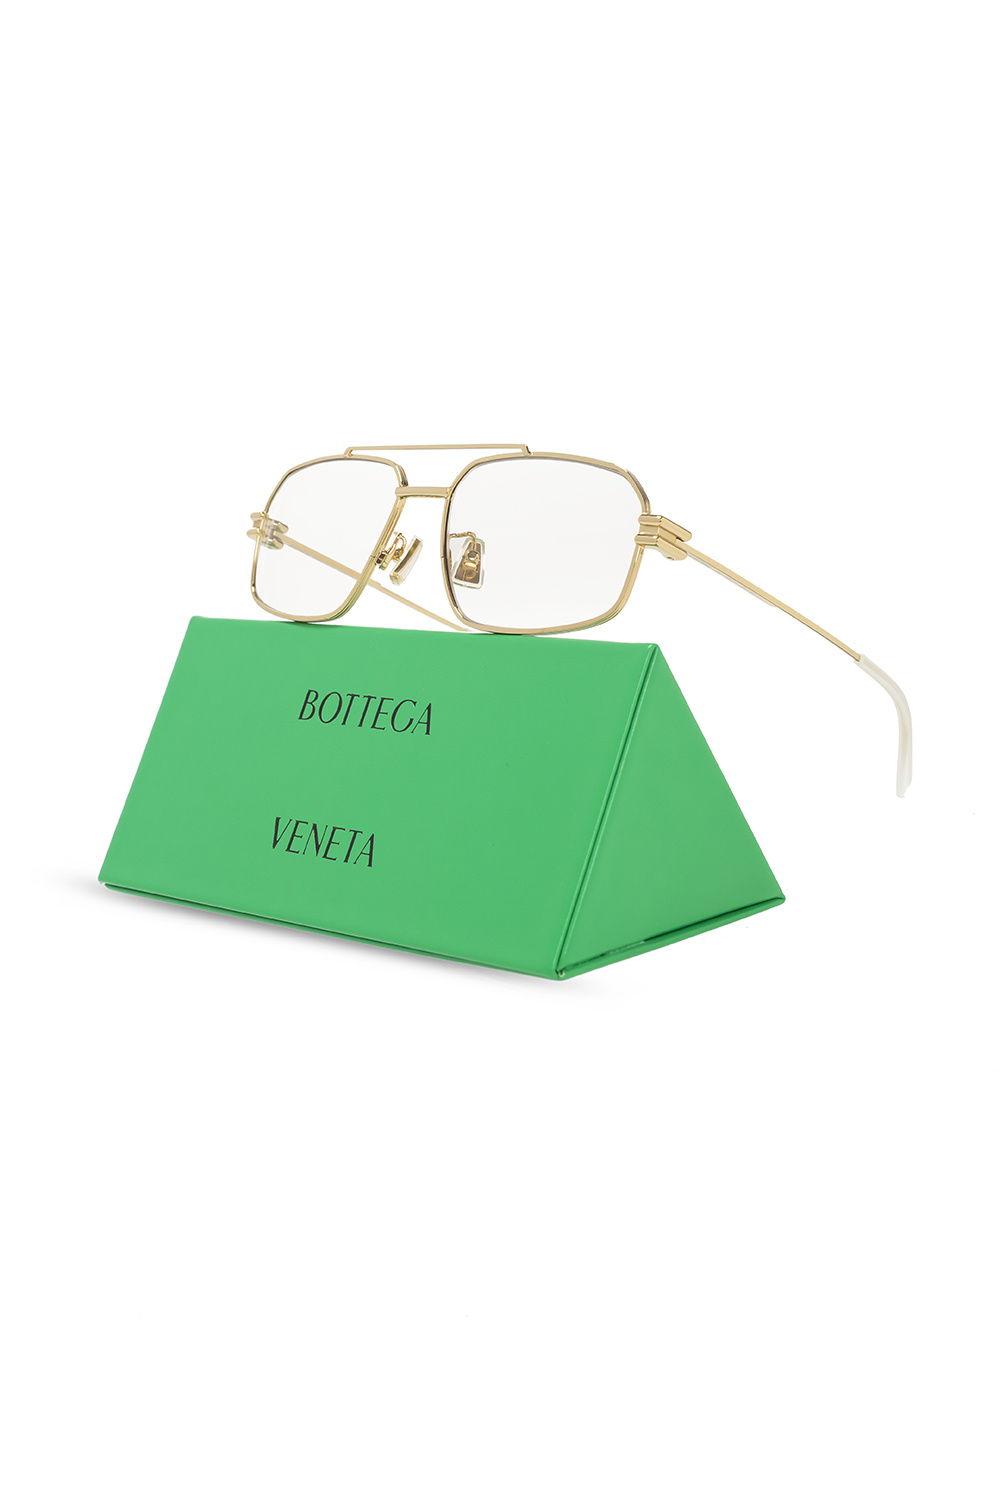 Bottega Veneta vava eyewear x kengo kuma cl0015 round frame Pineapple sunglasses item